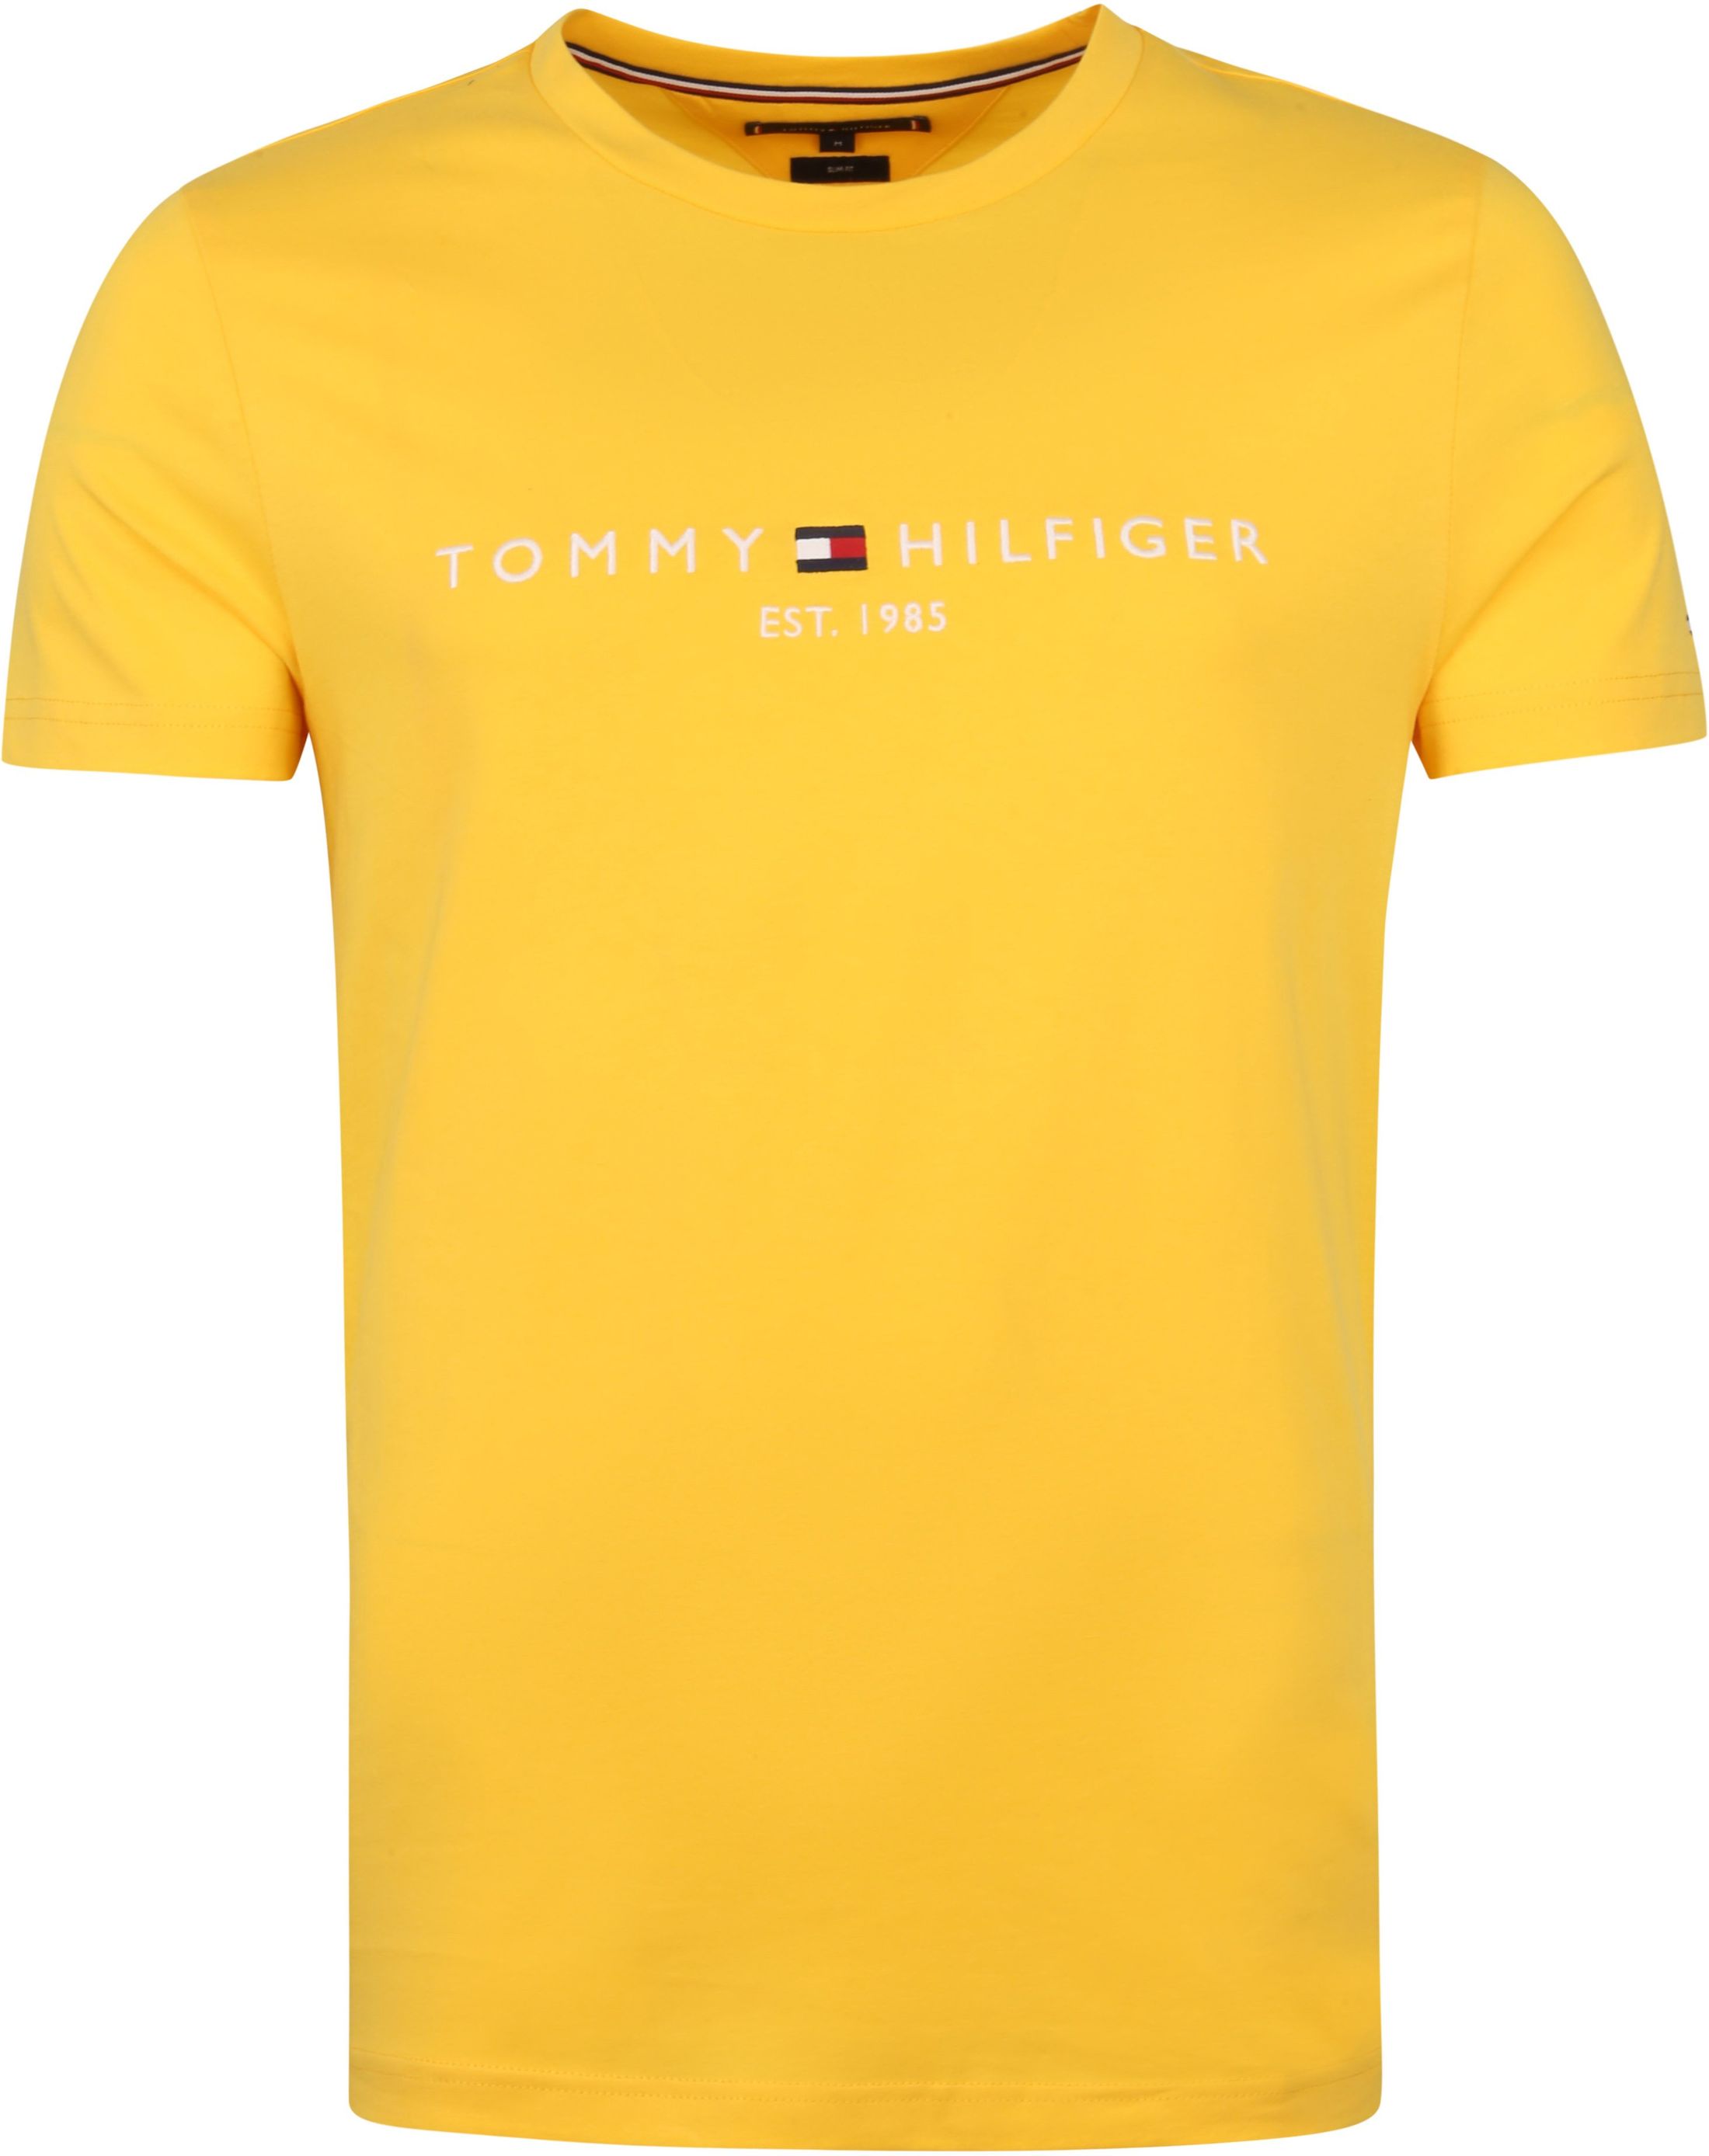 Tommy Hilfiger T Shirt Logo Yellow size L